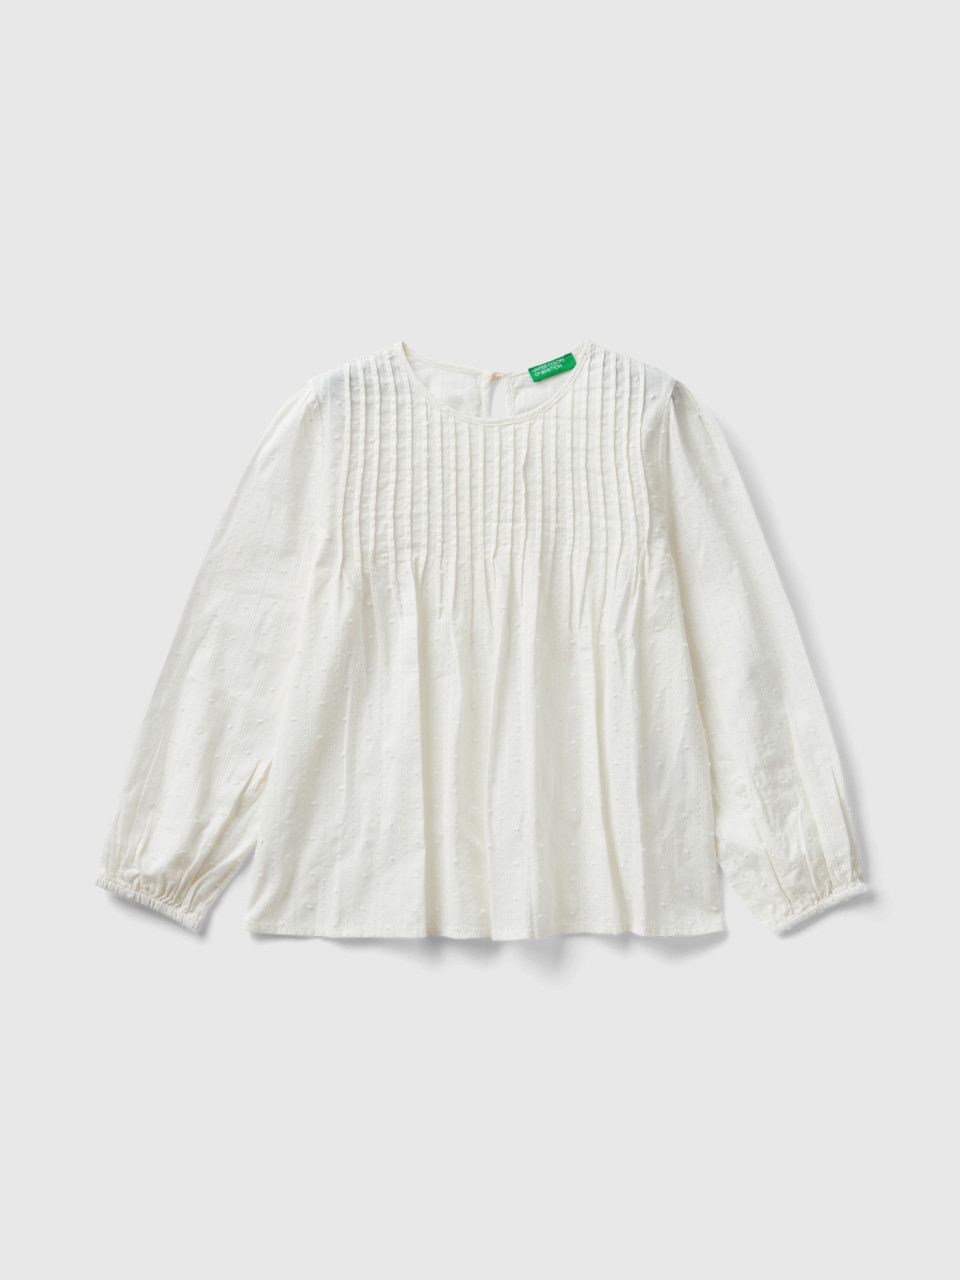 Benetton, Lightweight Blouse In Pure Cotton, Creamy White, Kids